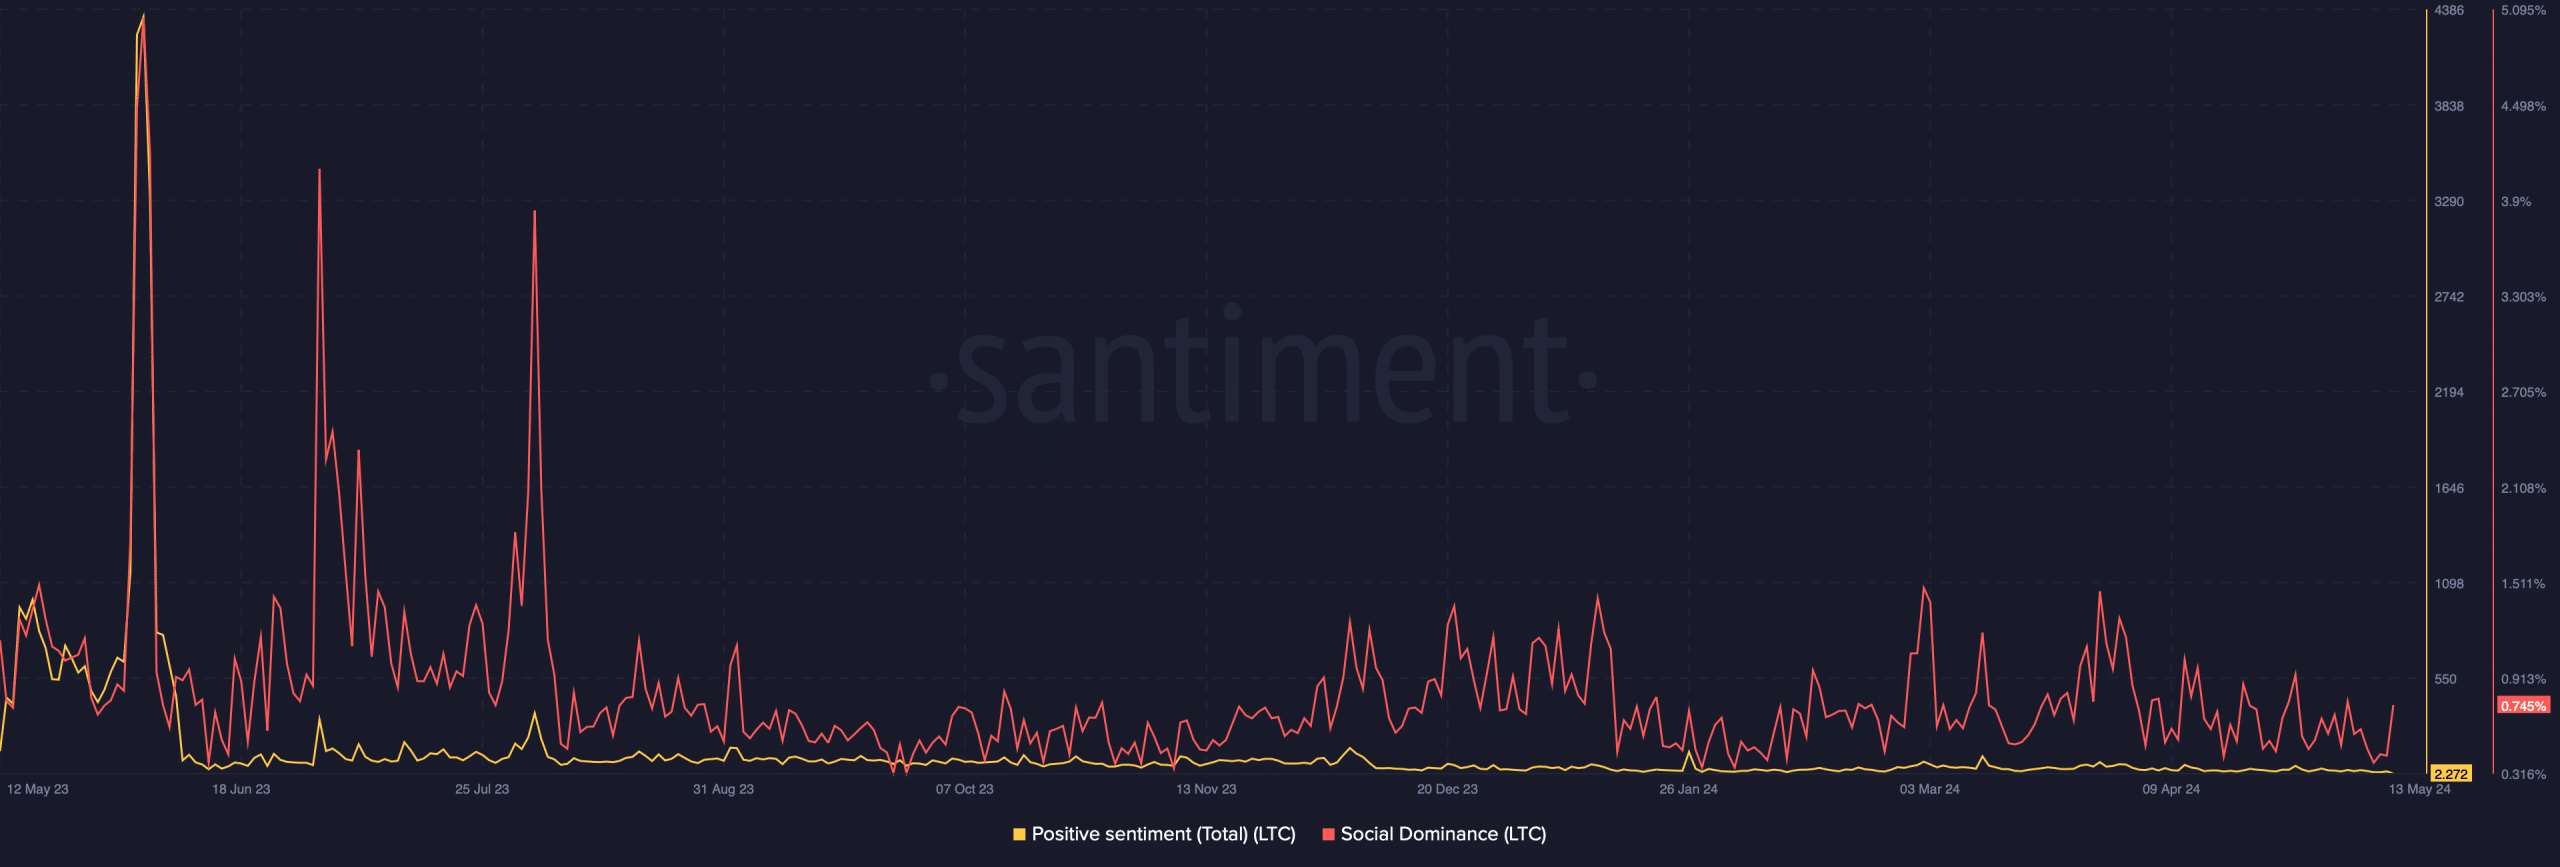 Litecoin's social dominance dropped